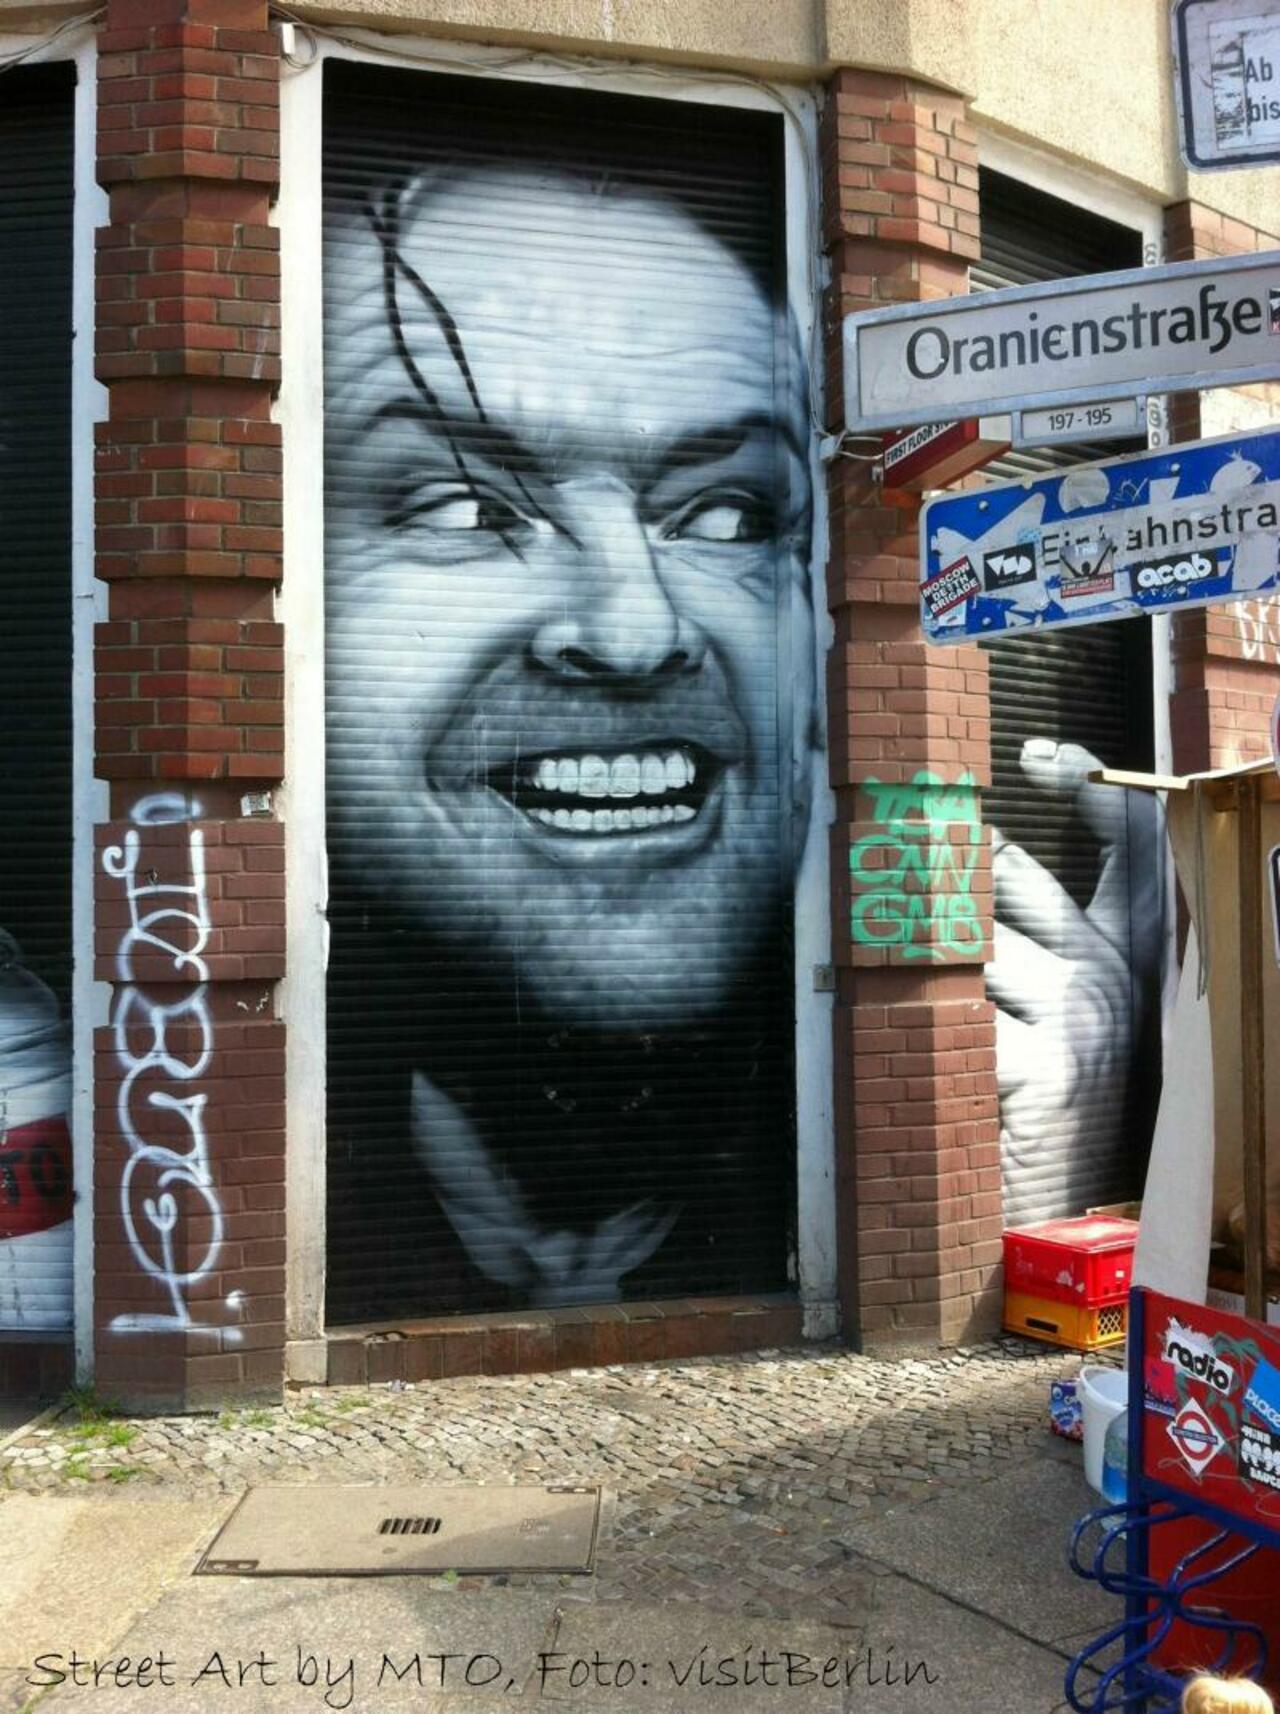 #StreetArt by MTO in Berlin-Kreuzberg #JackNicholson #art http://t.co/cvtIxk2x2v